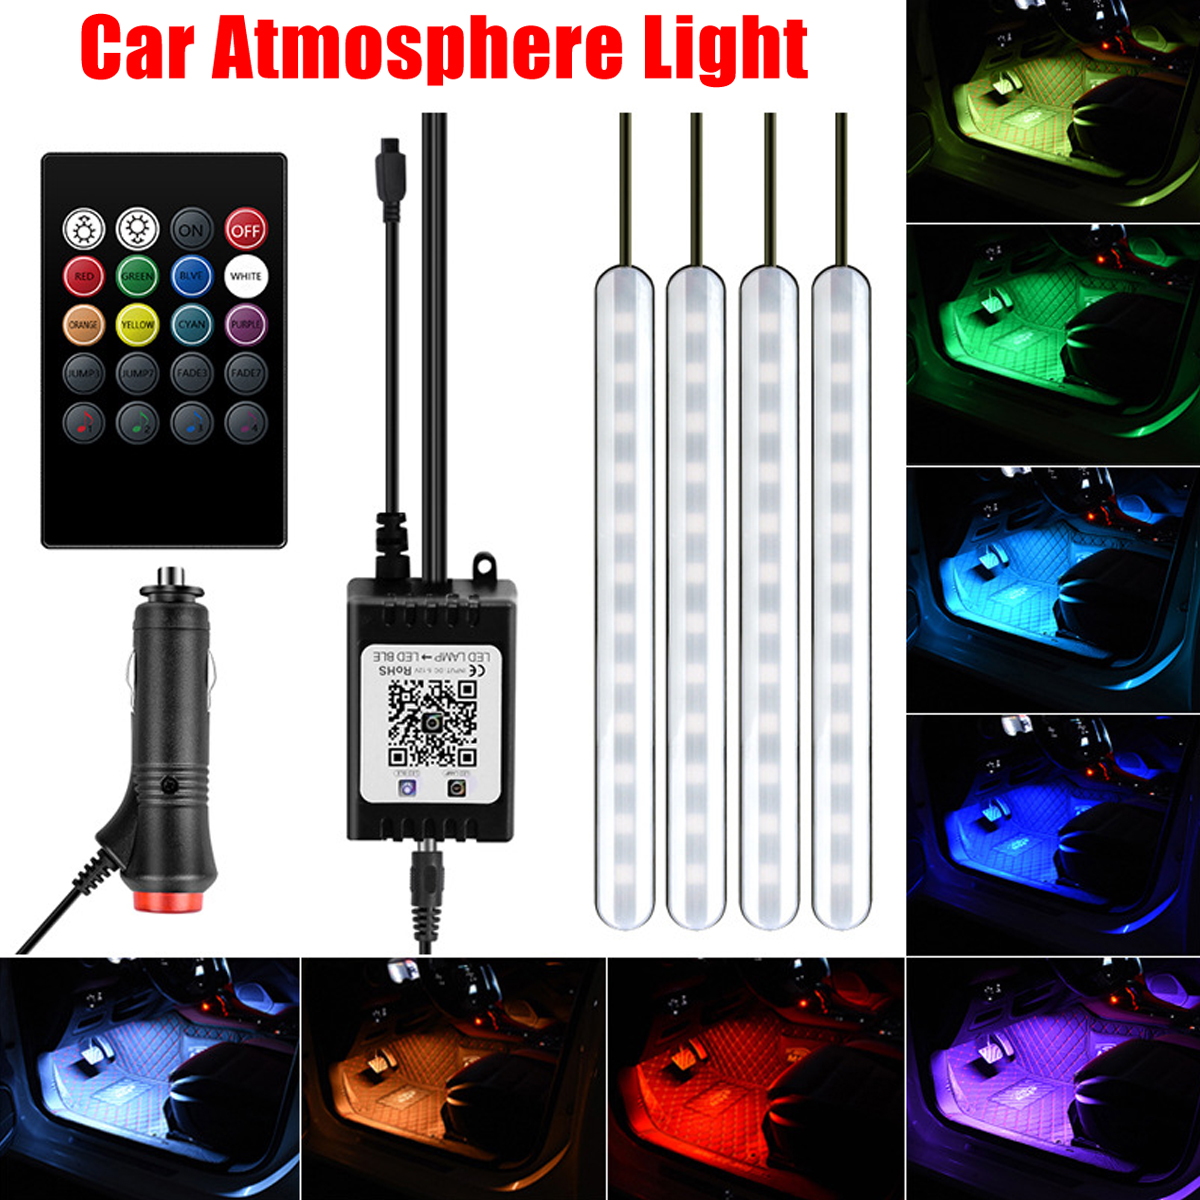 DC12V-10W-Car-Atmosphere-Light-USB-Colorful-Music-Voice-Control-LED-Rigid-Strip-Lamp--Remote-Control-1651600-1